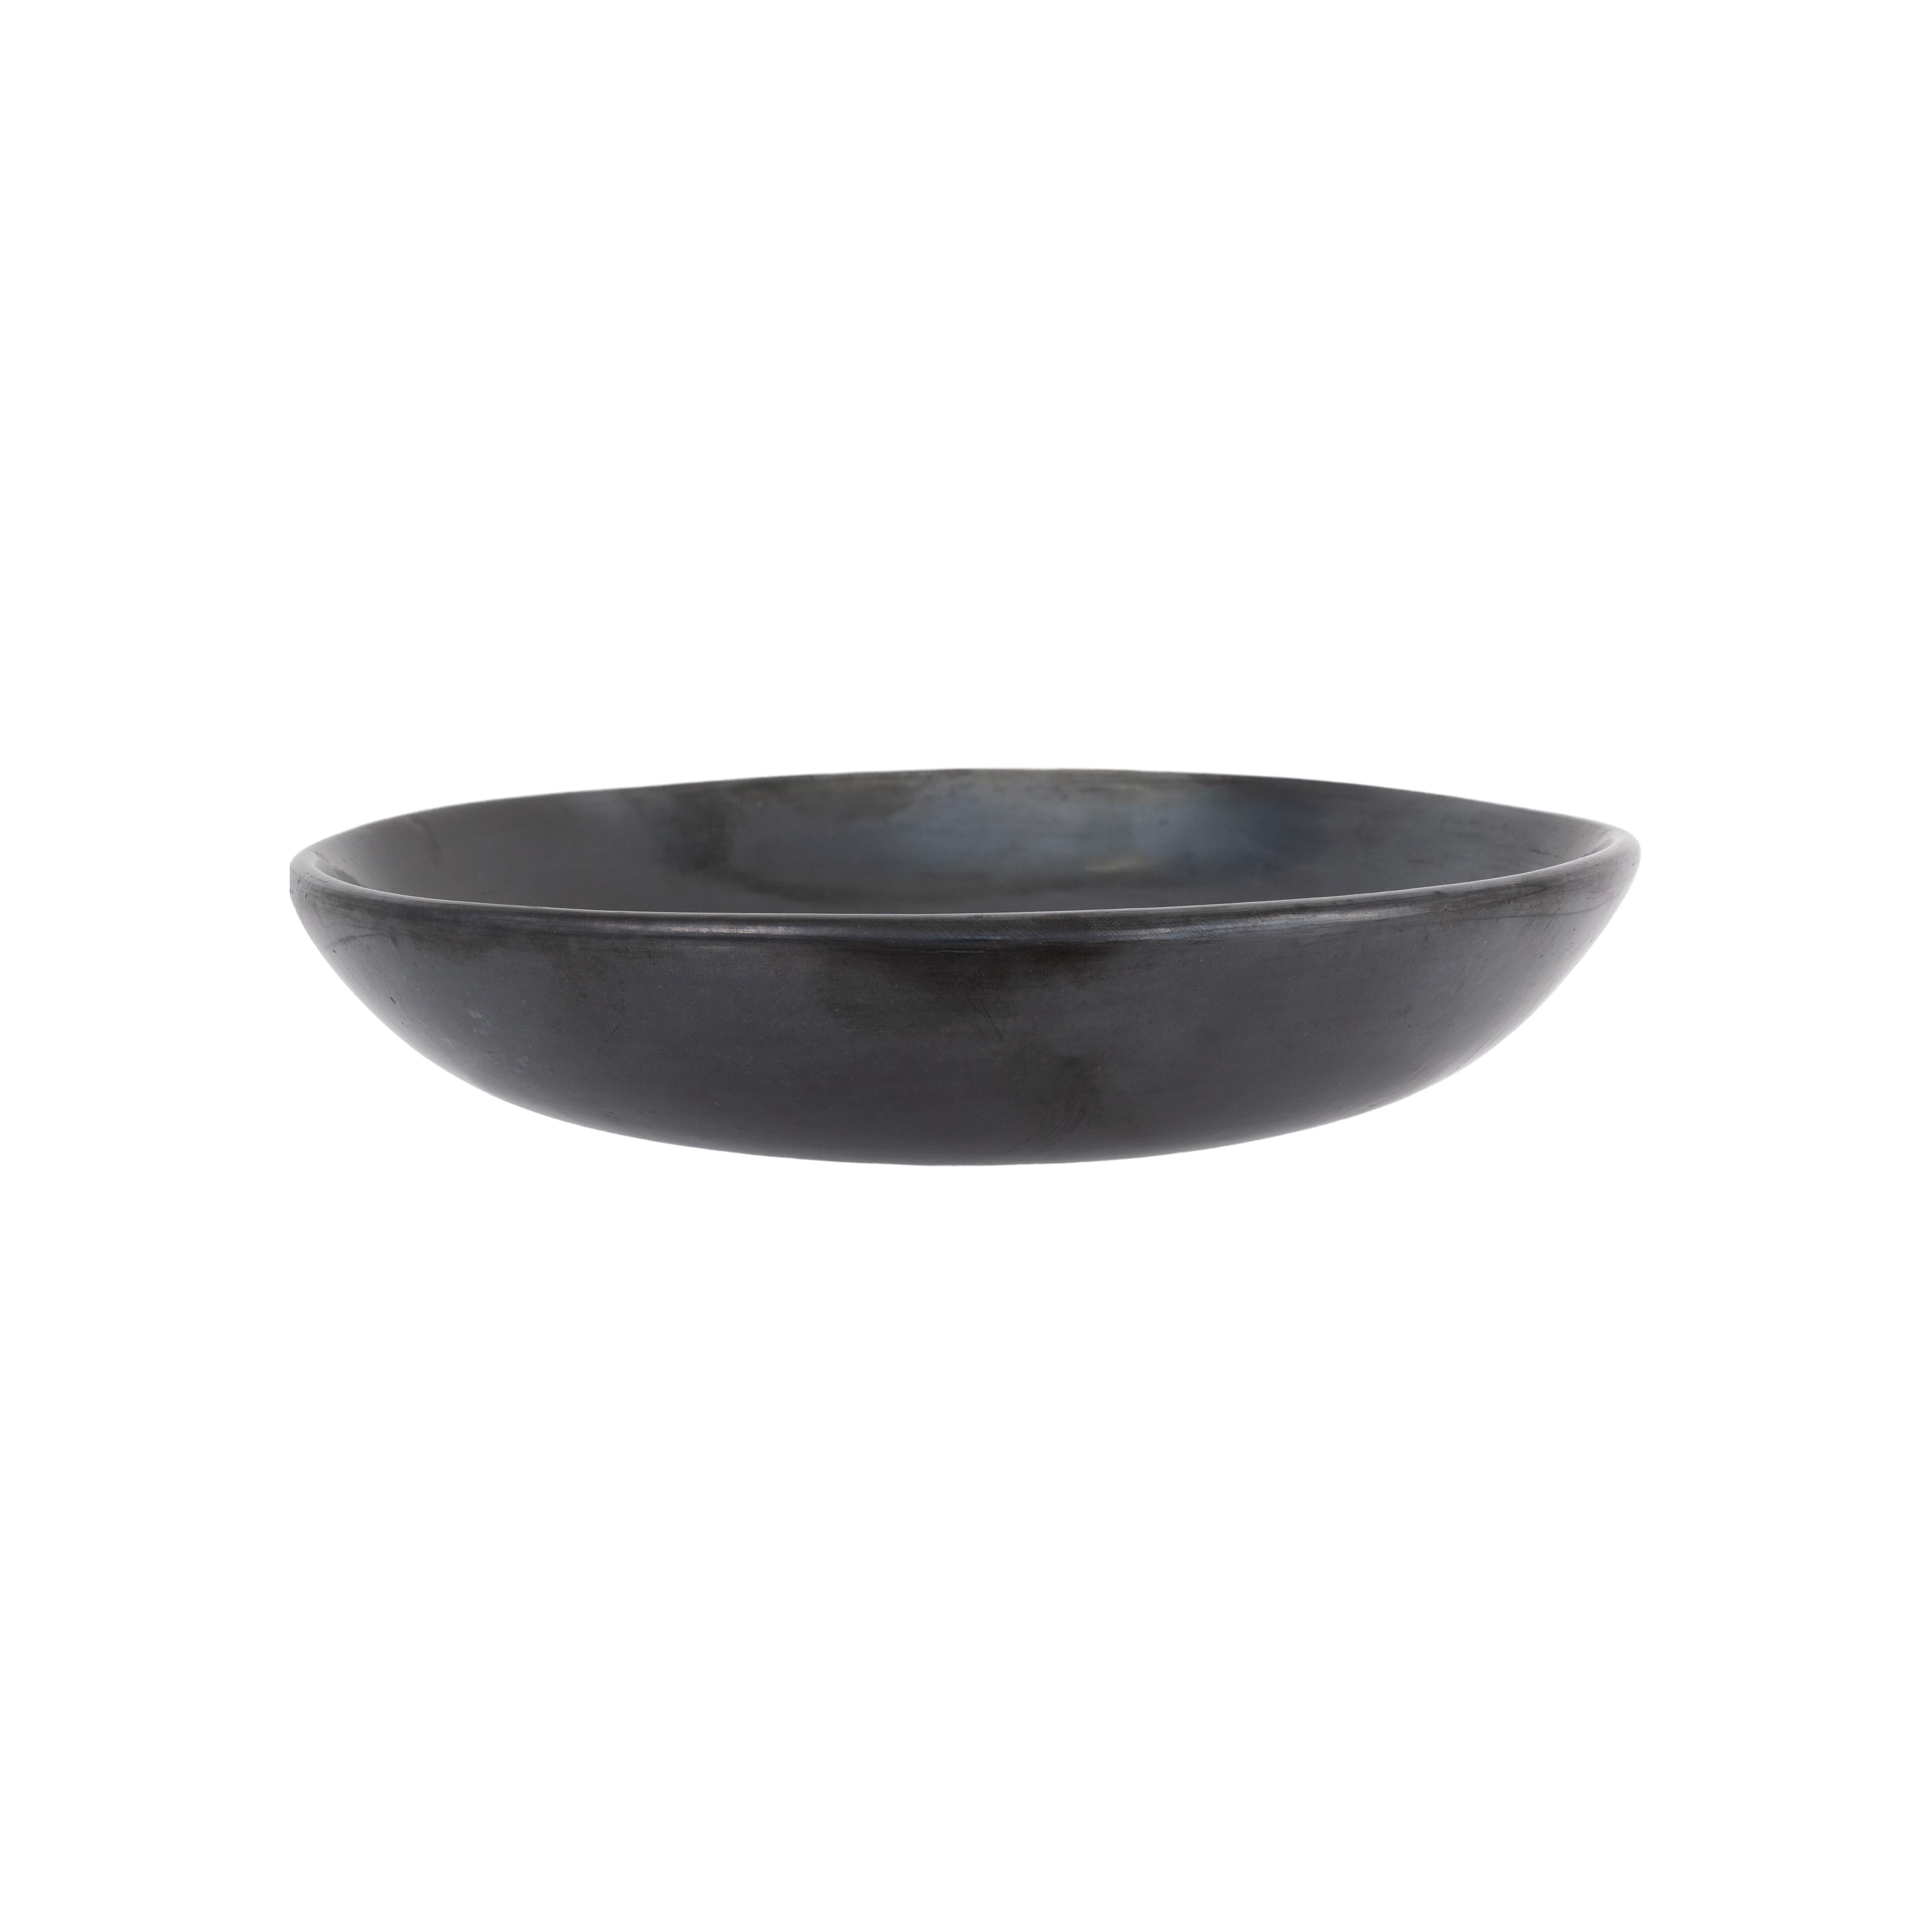 Polished plain black on black pottery bowl by Maria Martinez, signed Maria Poveka. 1956 - 1965; 9 1/2